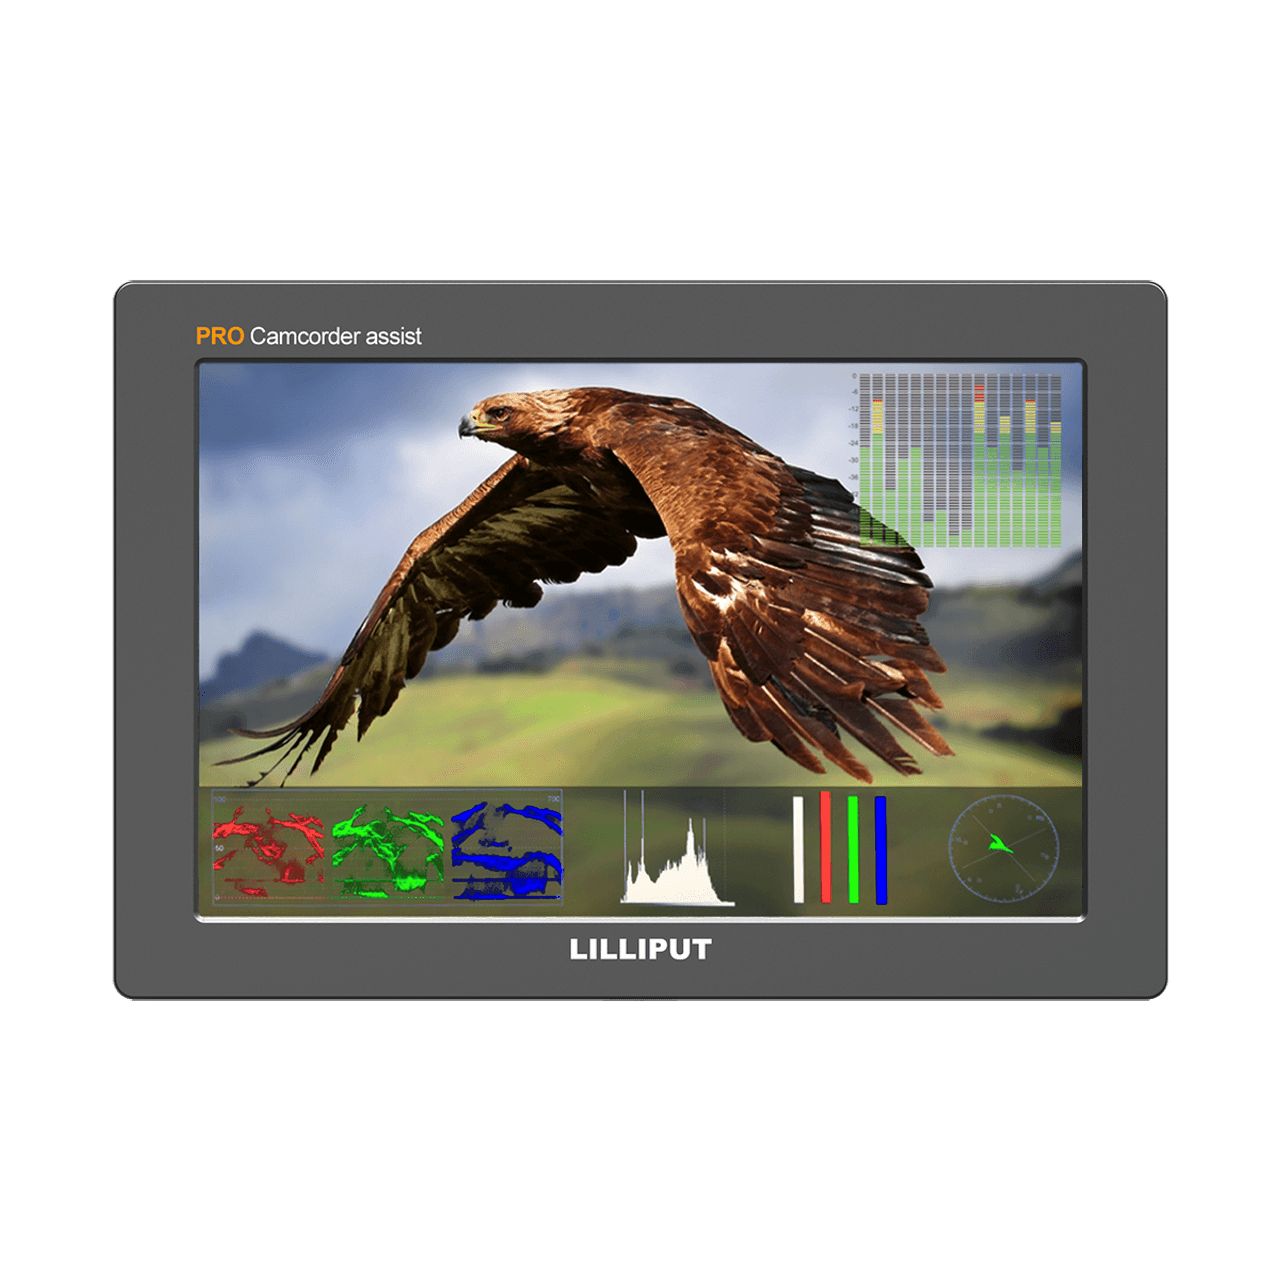 Lilliput Q7 Pro 7 Inch Full HD SDI Monitor with HDR/3D LUTs